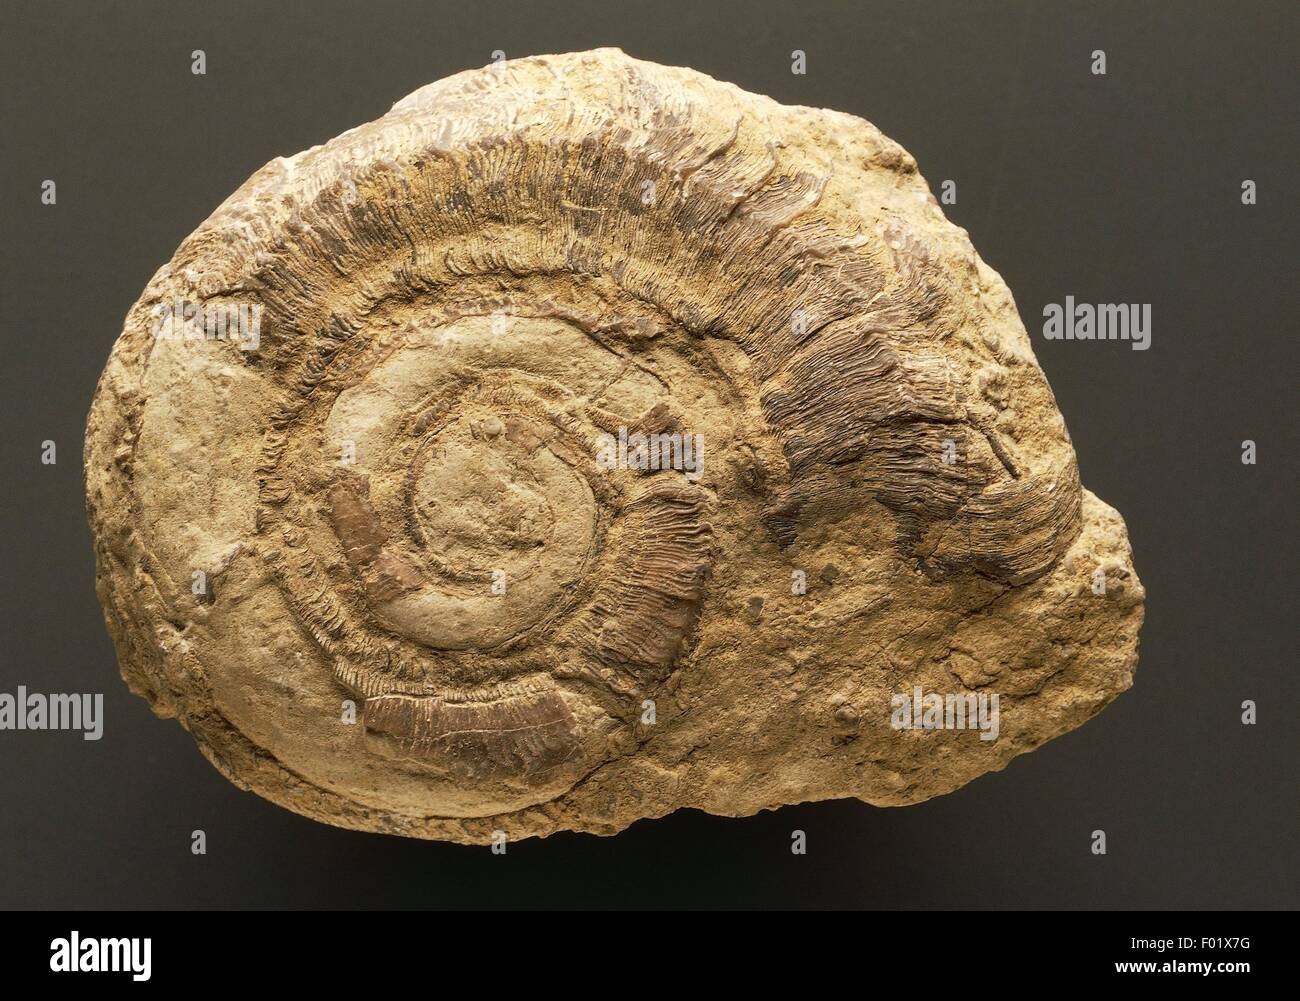 Fossils - Protostomia - Mollusca - Gastropoda - Oriostoma discors - Silurian. Stock Photo